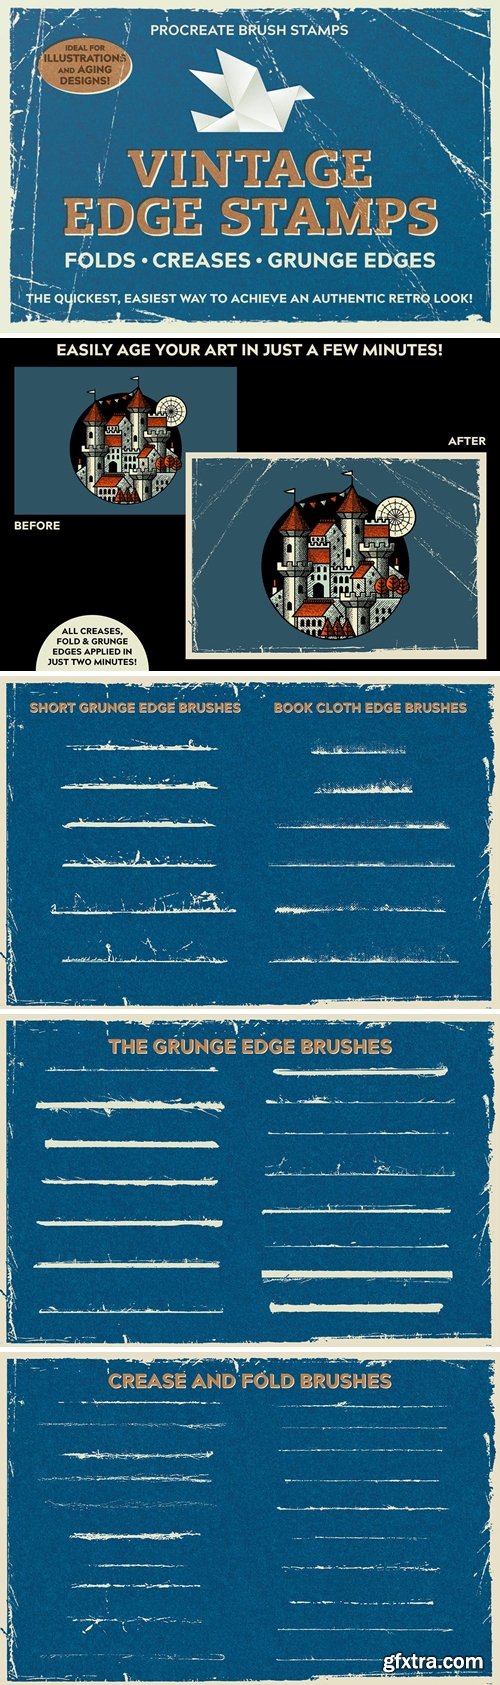 Vintage Edge Stamp Brushes